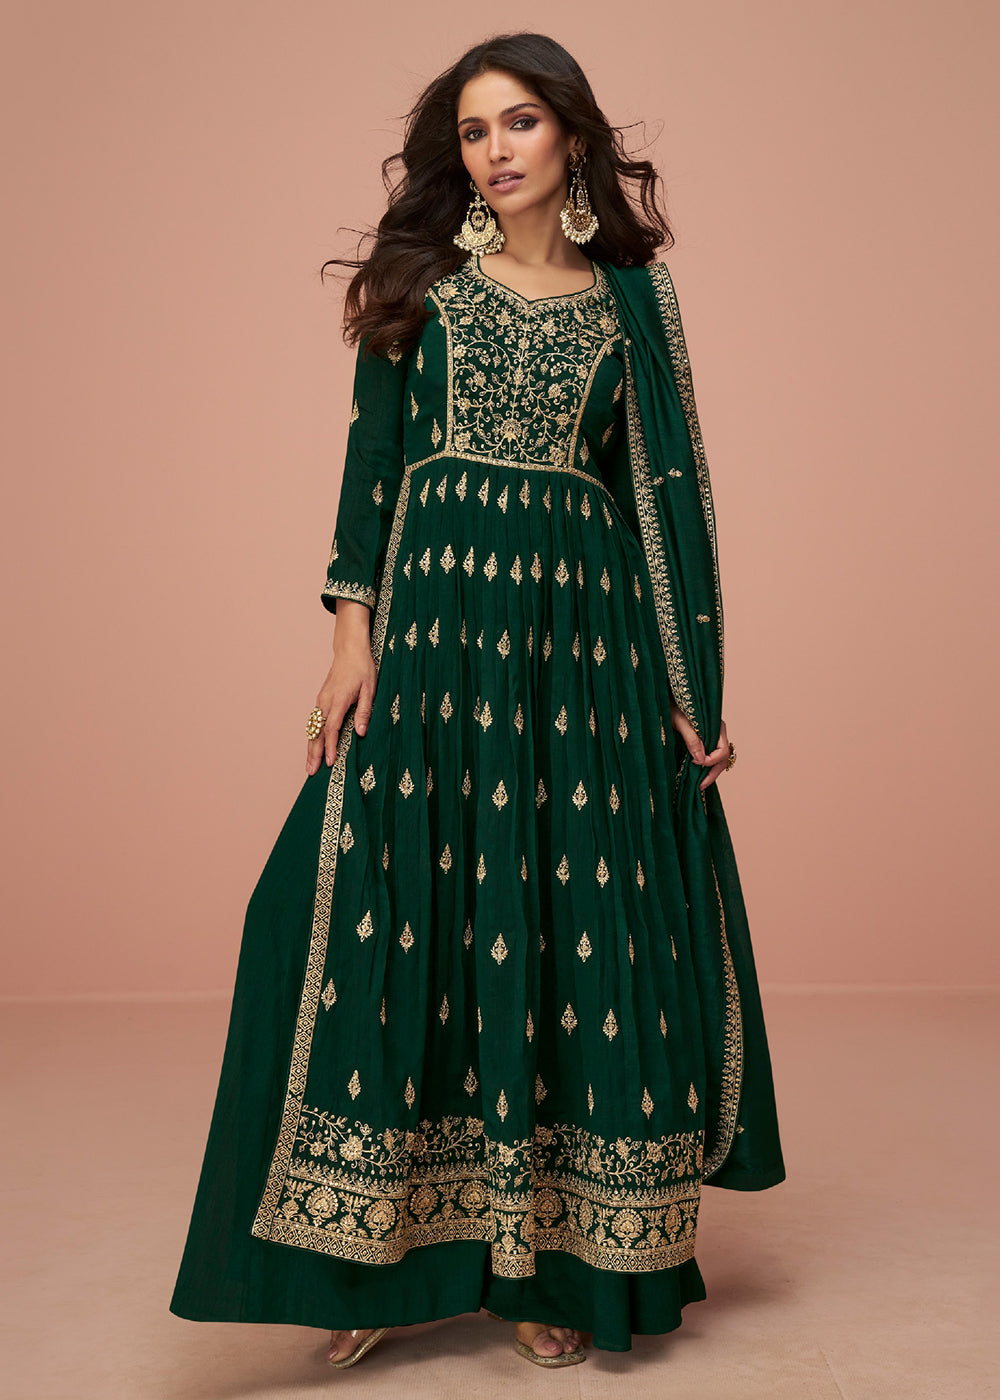 Buy Now Bottle Green Wedding Wear Silk Trendy Palazzo Suit Online in USA, UK, Canada, Germany, Australia & Worldwide at Empress Clothing.